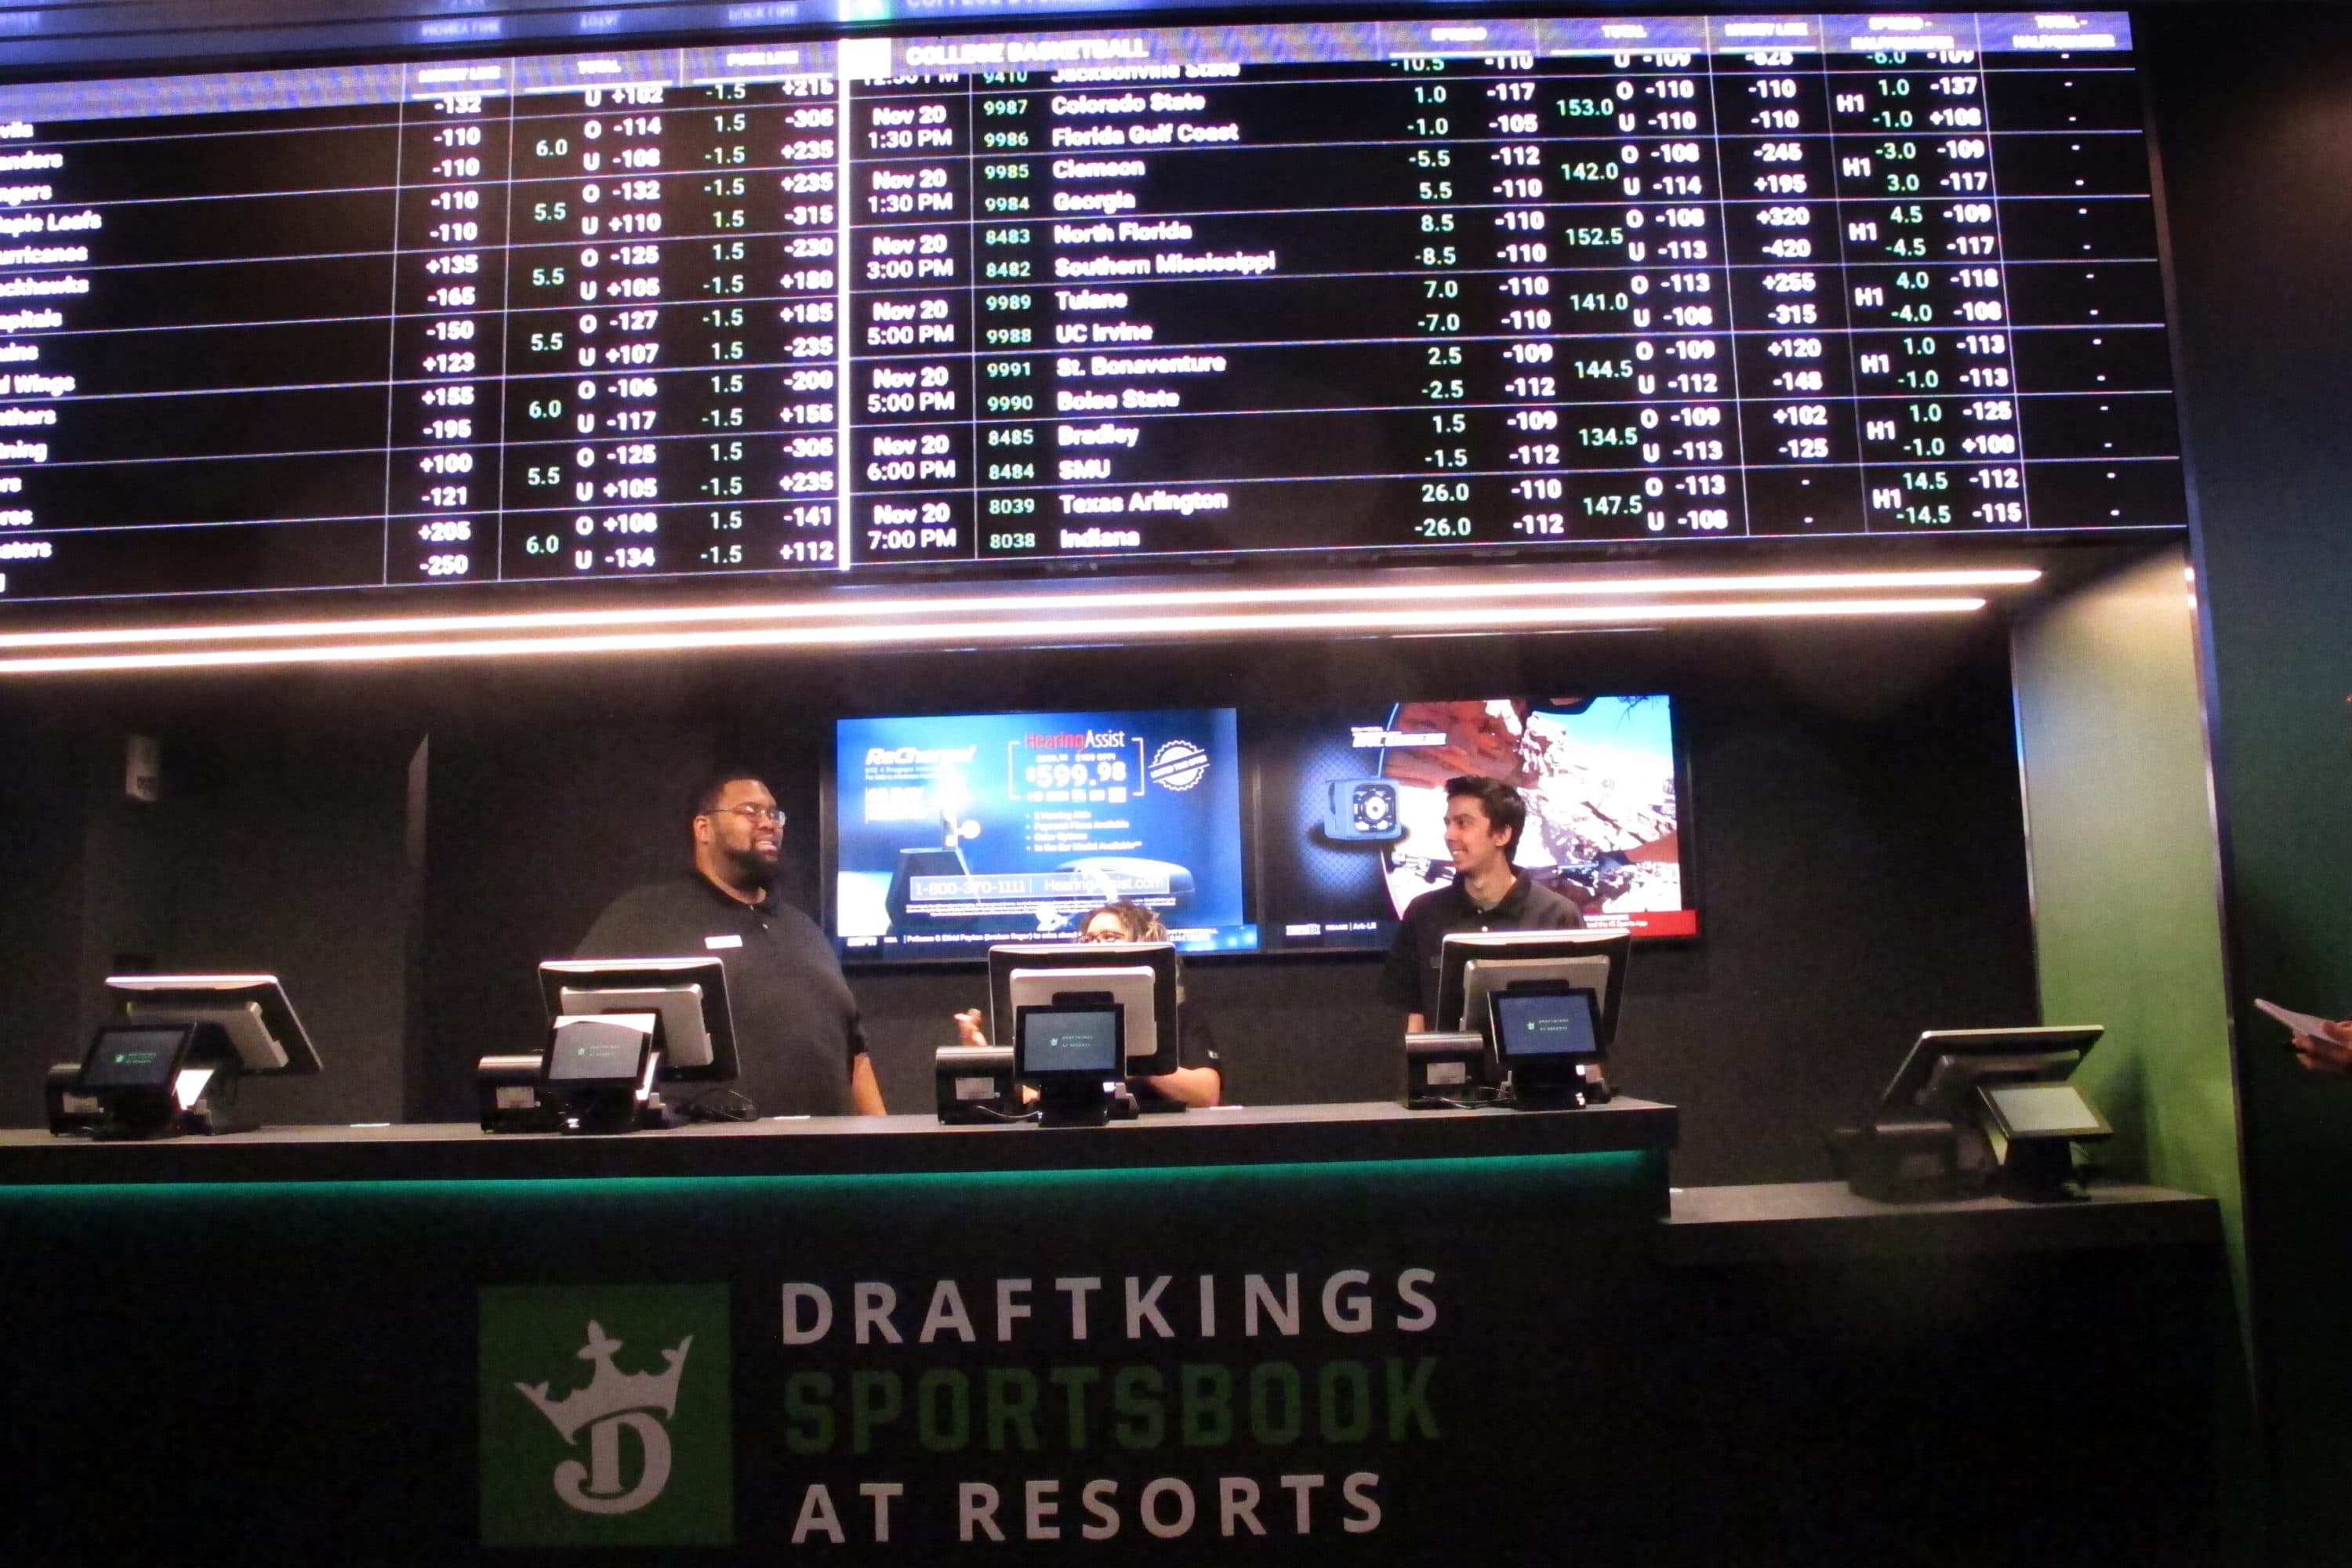 Employees work at the DraftKings sportsbook at Resorts Casino in Atlantic City NJ, on November 20, 2018. (Wayne Parry/AP File)